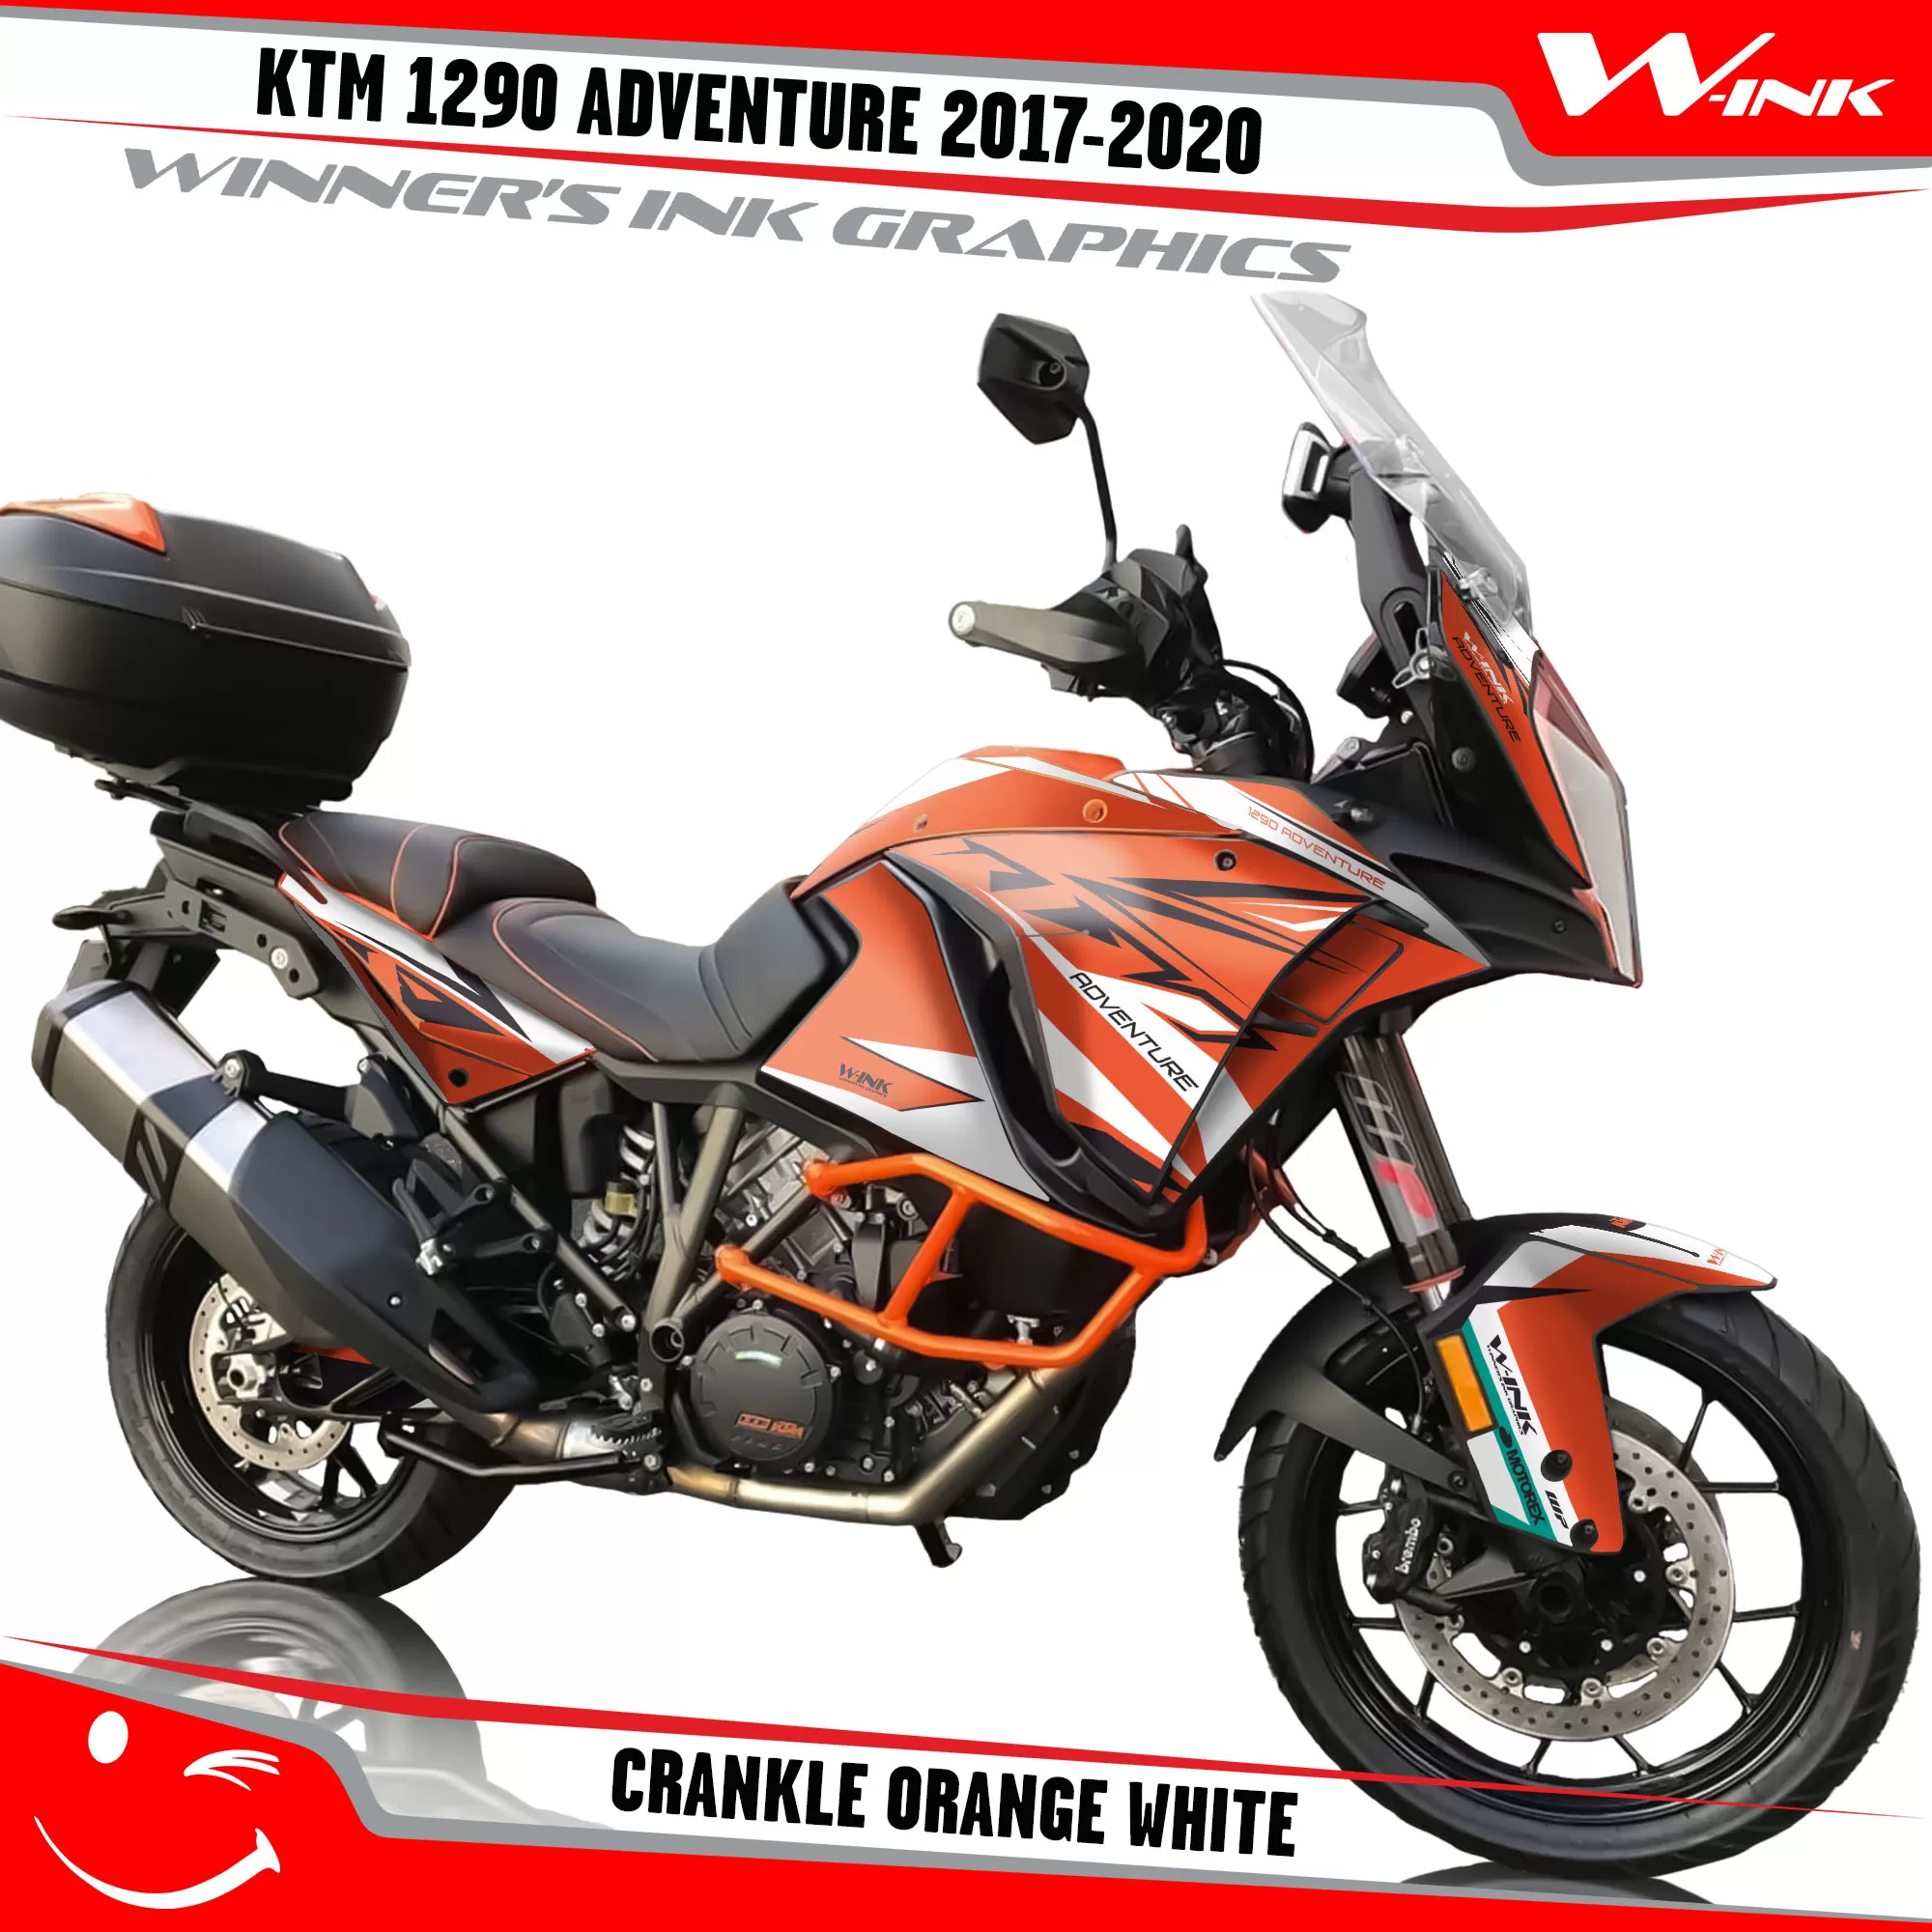 KTM-Adventure-1290-2017-2018-2019-2020-graphics-kit-and-decals-Crankle-Orange-White